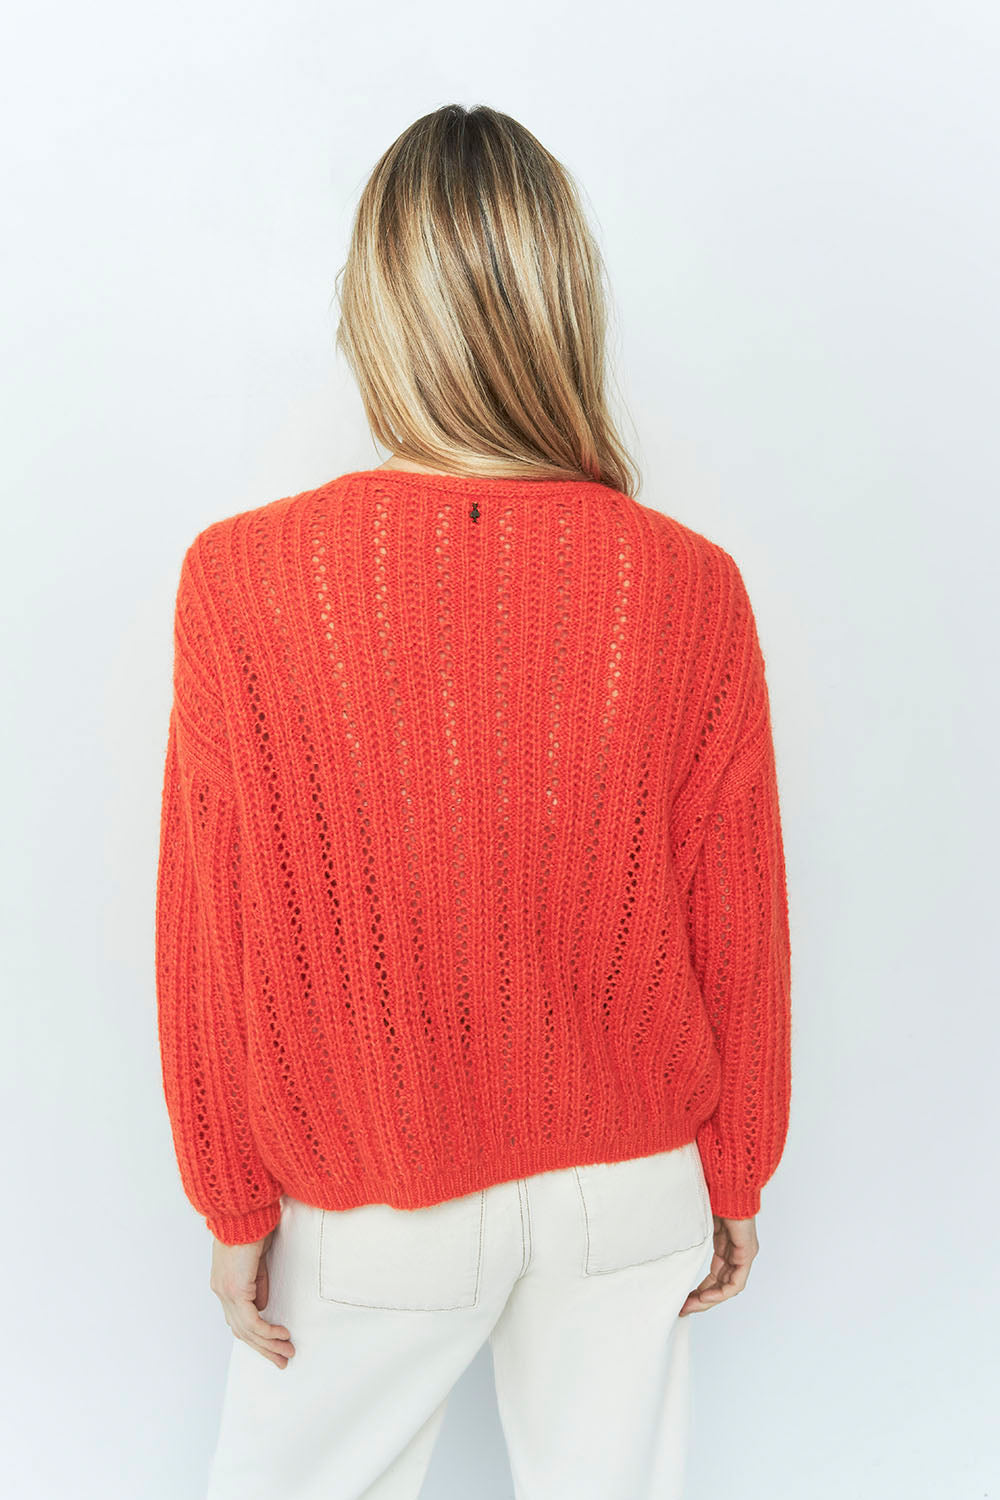 TIMING - Pull orange tricot fantaisie